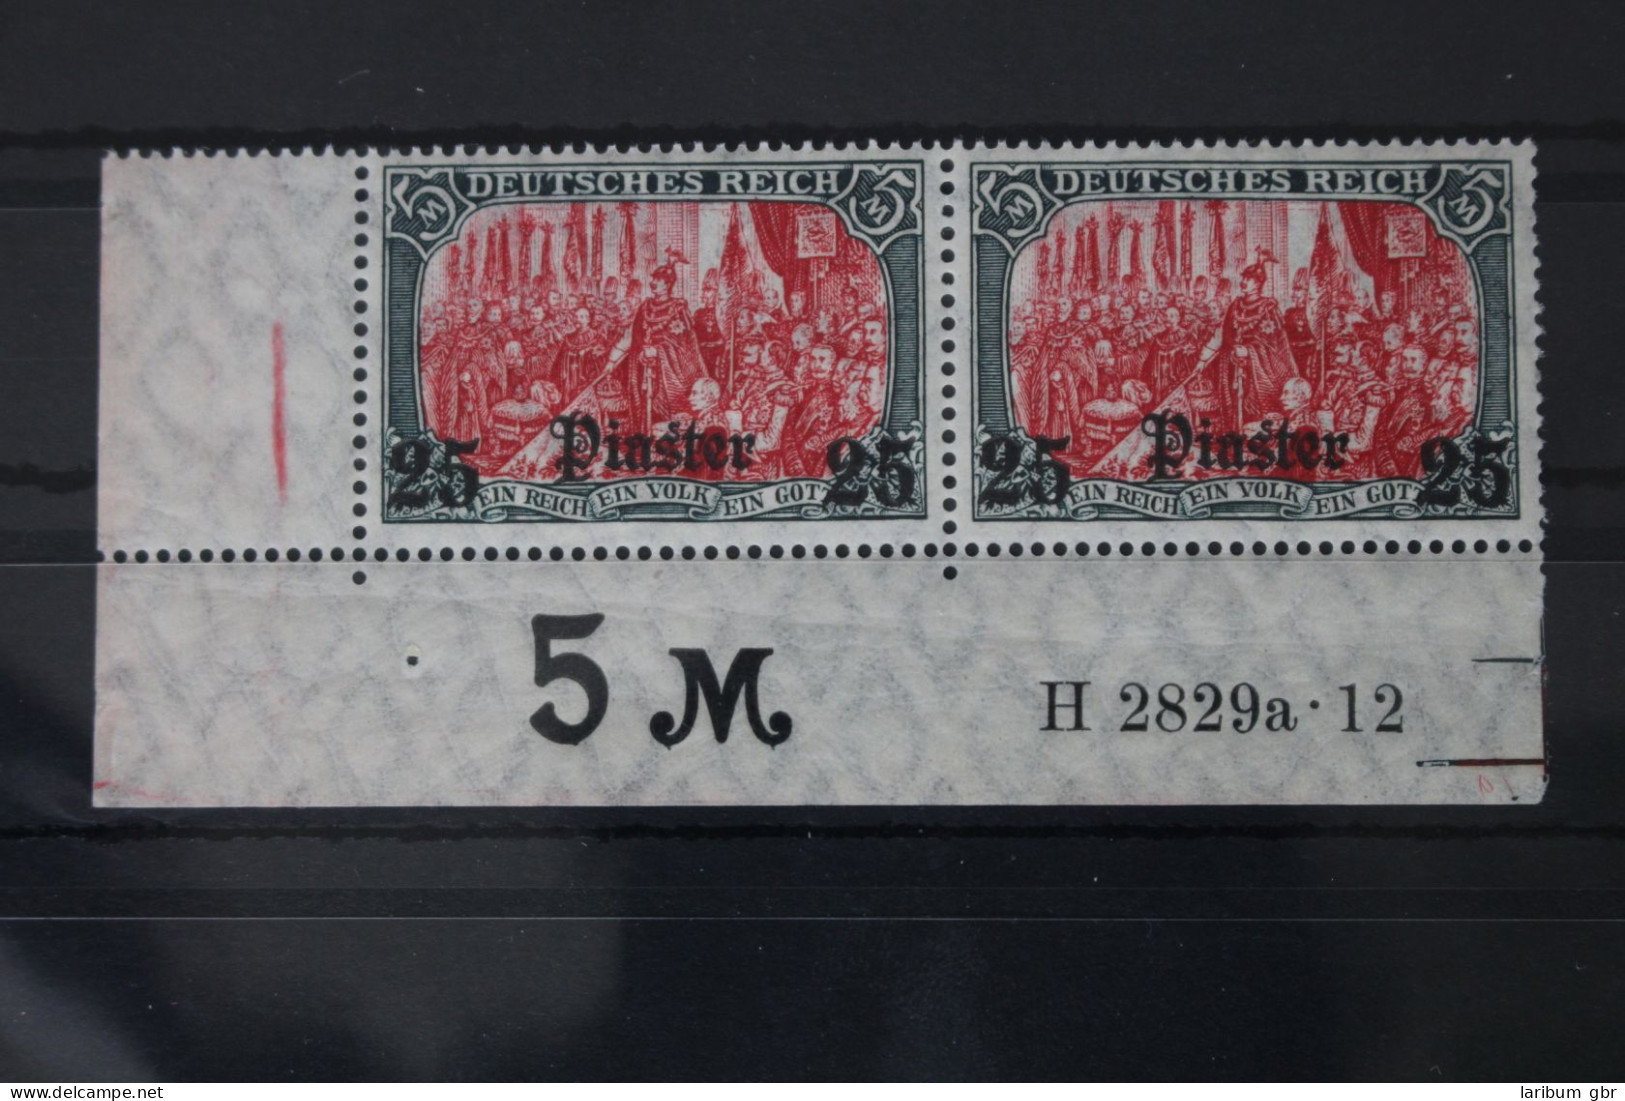 Deutsche Auslandspostämter Türkei 47b HAN Postfrisch Eckrandpaar #WT596 - Turchia (uffici)